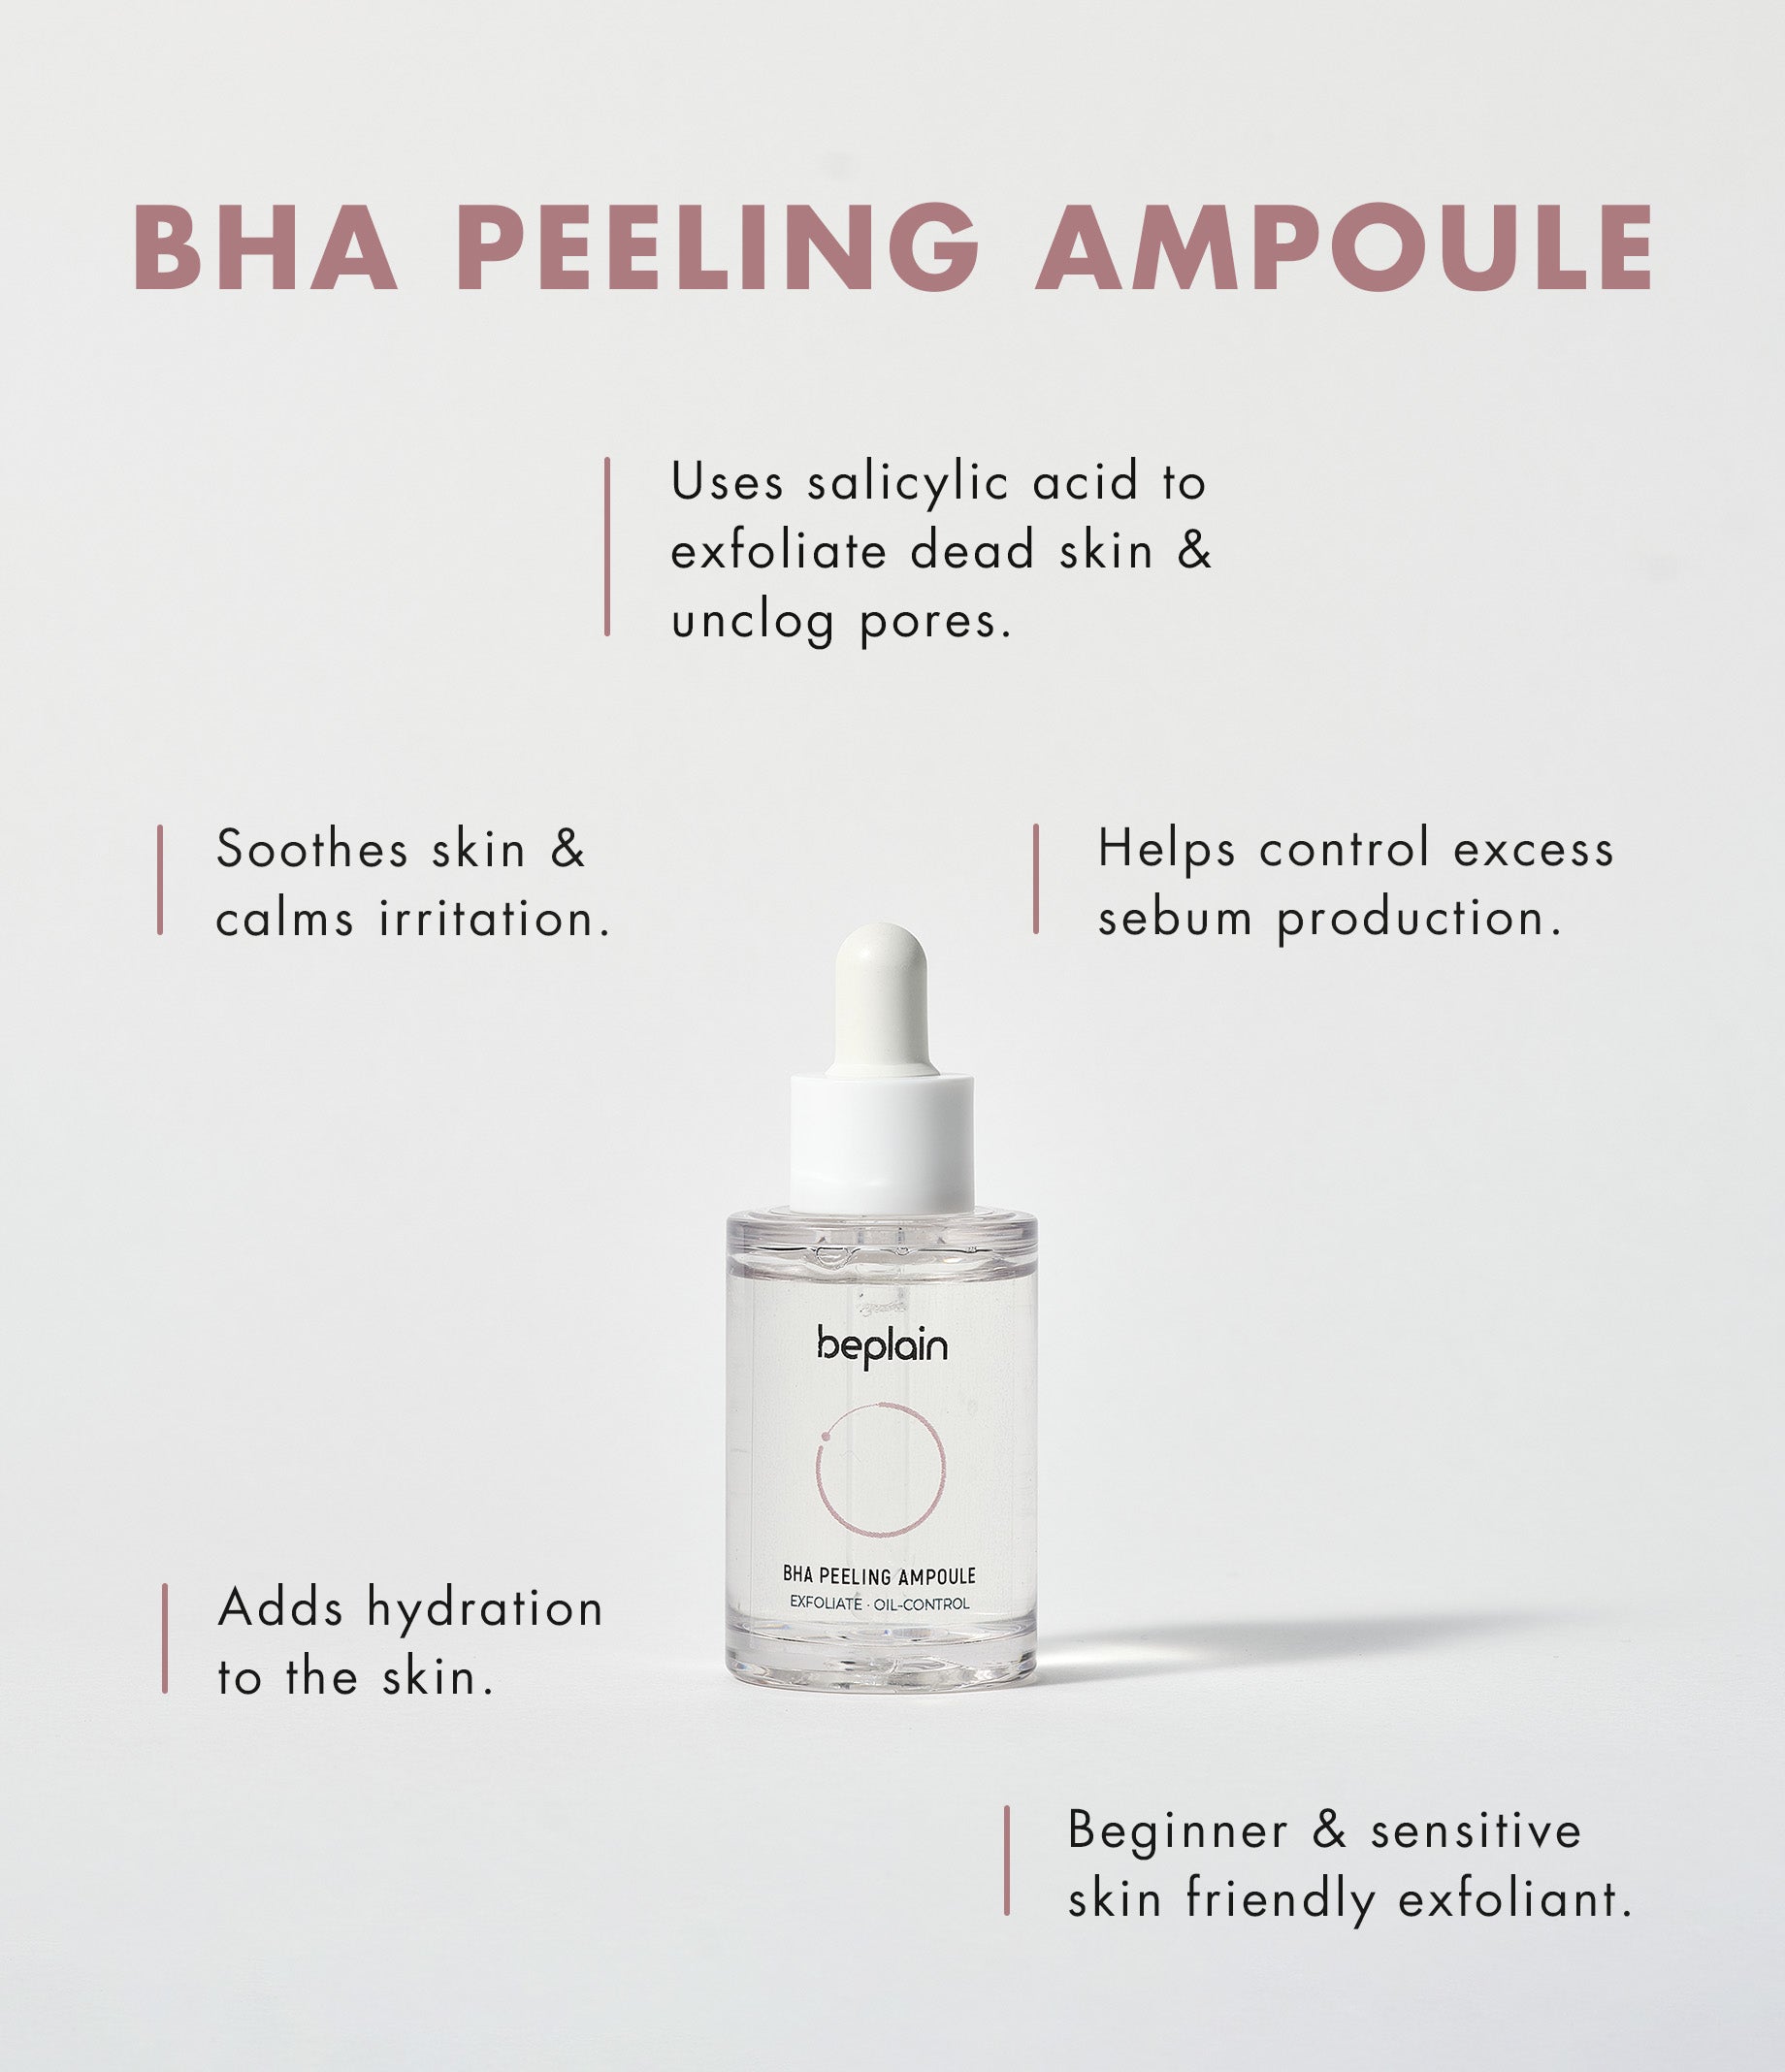 Beplain BHA Peeling Ampoule (30ml)